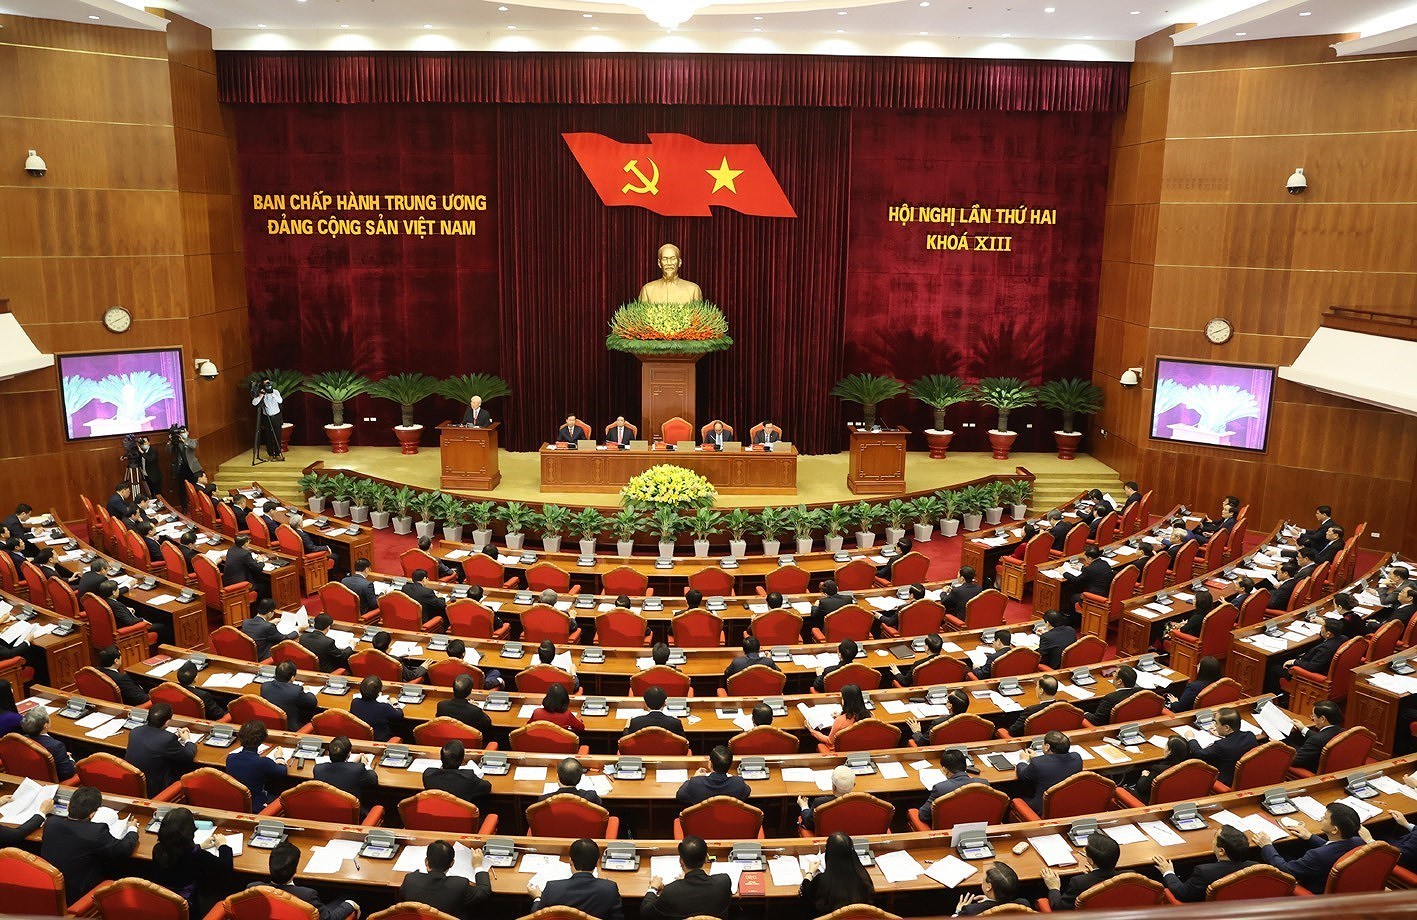 Inauguran segundo pleno del Comite Central del Partido Comunista de Vietnam del XIII mandato hinh anh 1